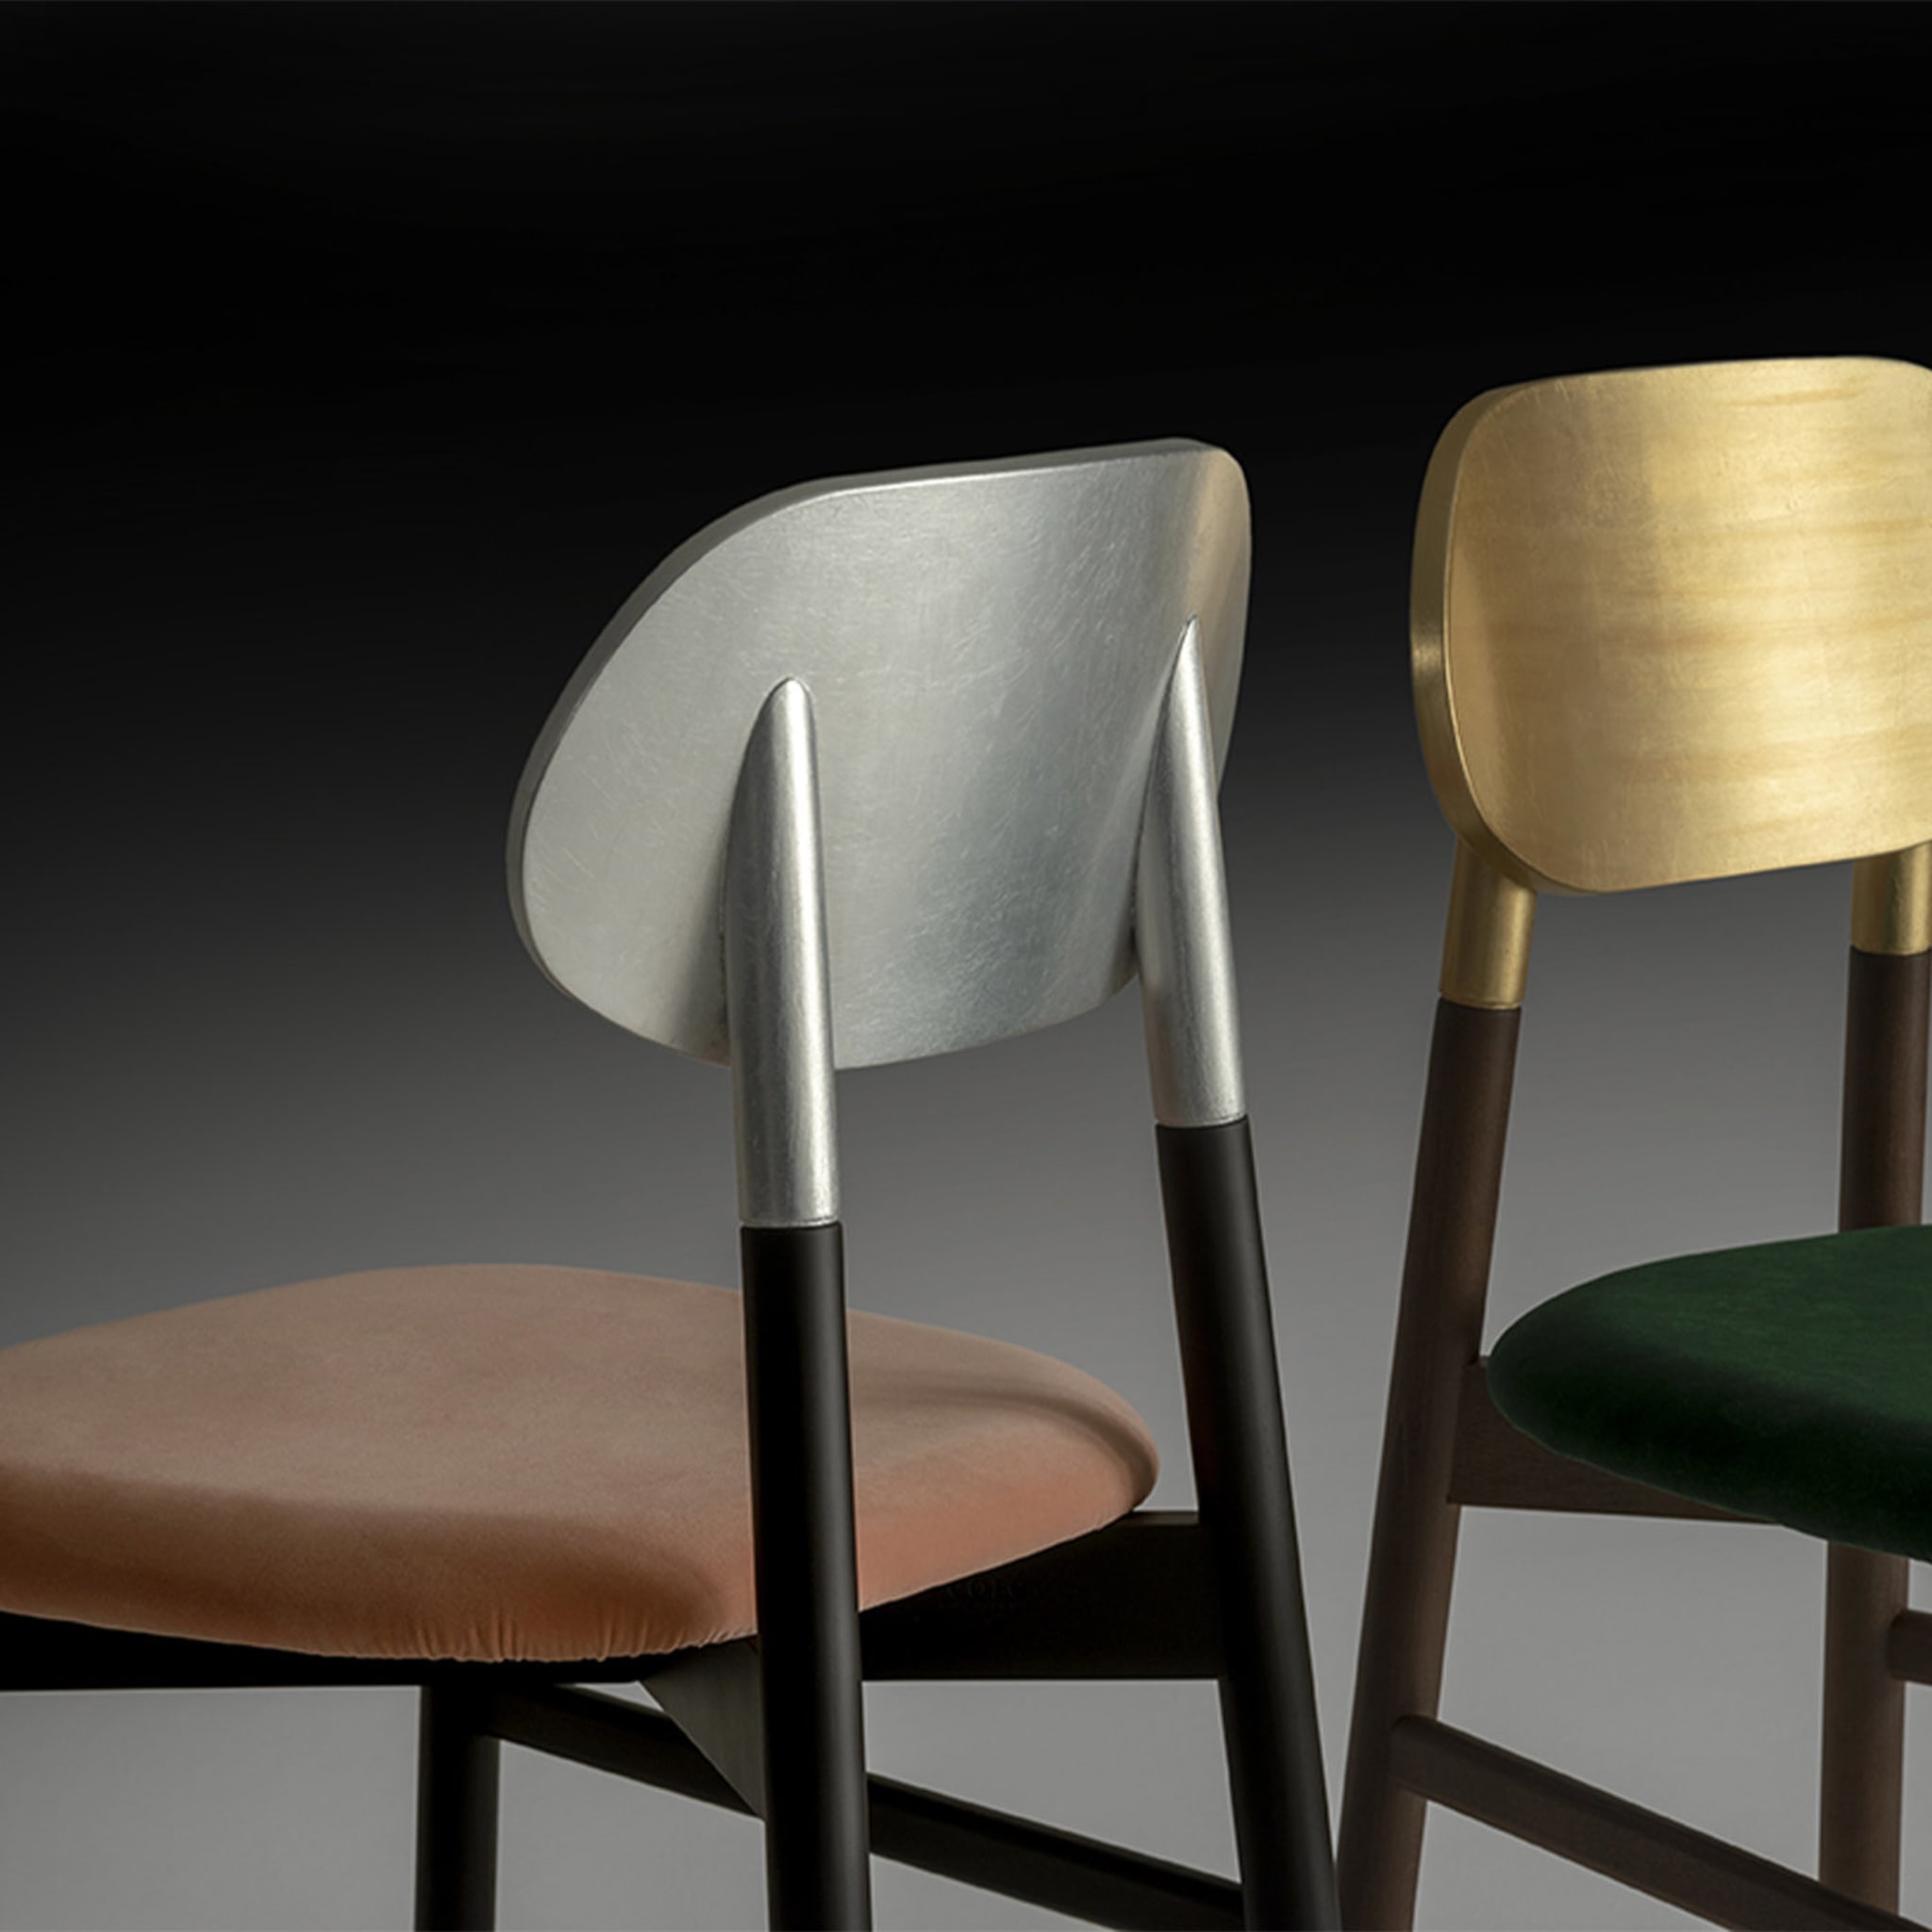 Bokken Gold and Emerald Chair by Bellavista & Piccini - Alternative view 3